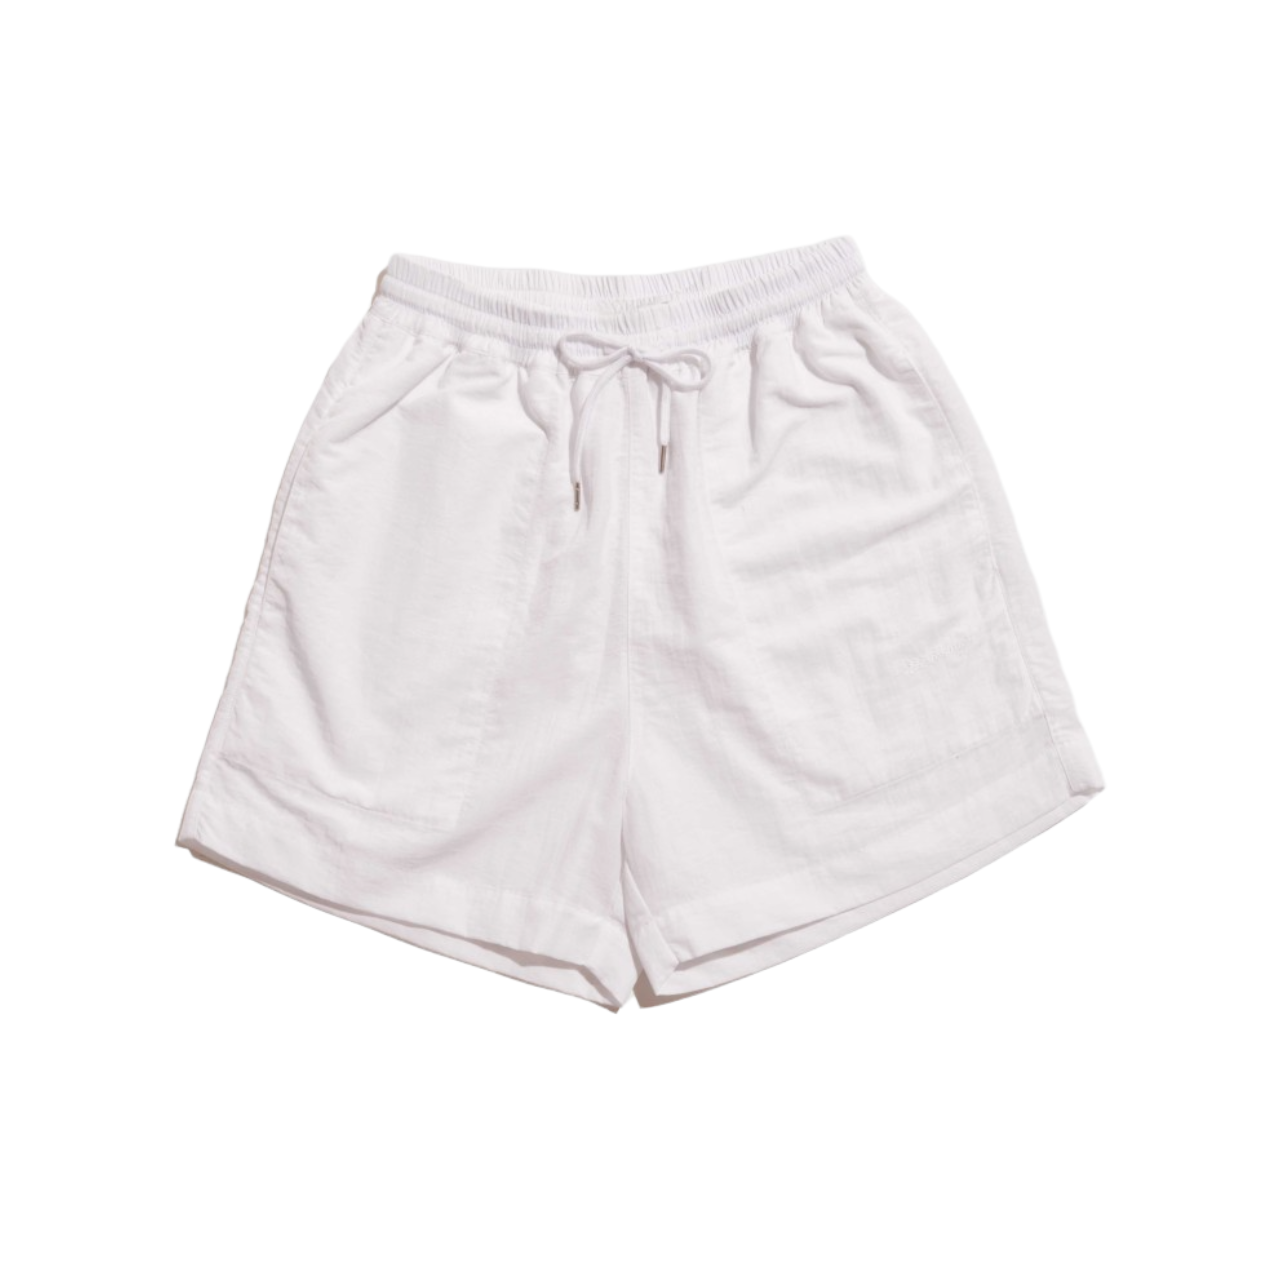 Madmatter Embroidery Nylon Shorts - White